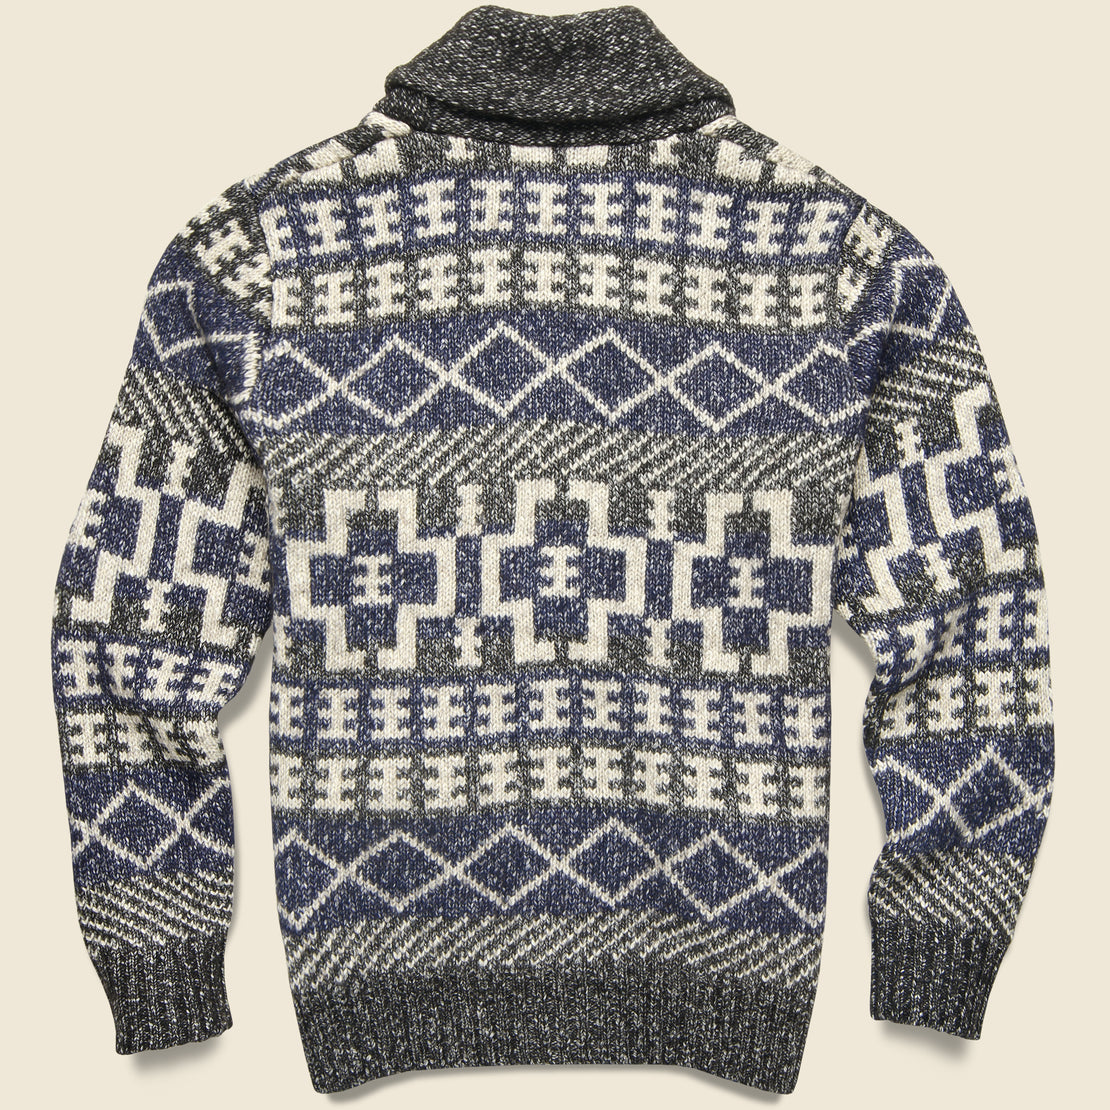 Southwestern Shawl Cardigan - Black/Blue/White - Schott - STAG Provisions - Tops - Sweater